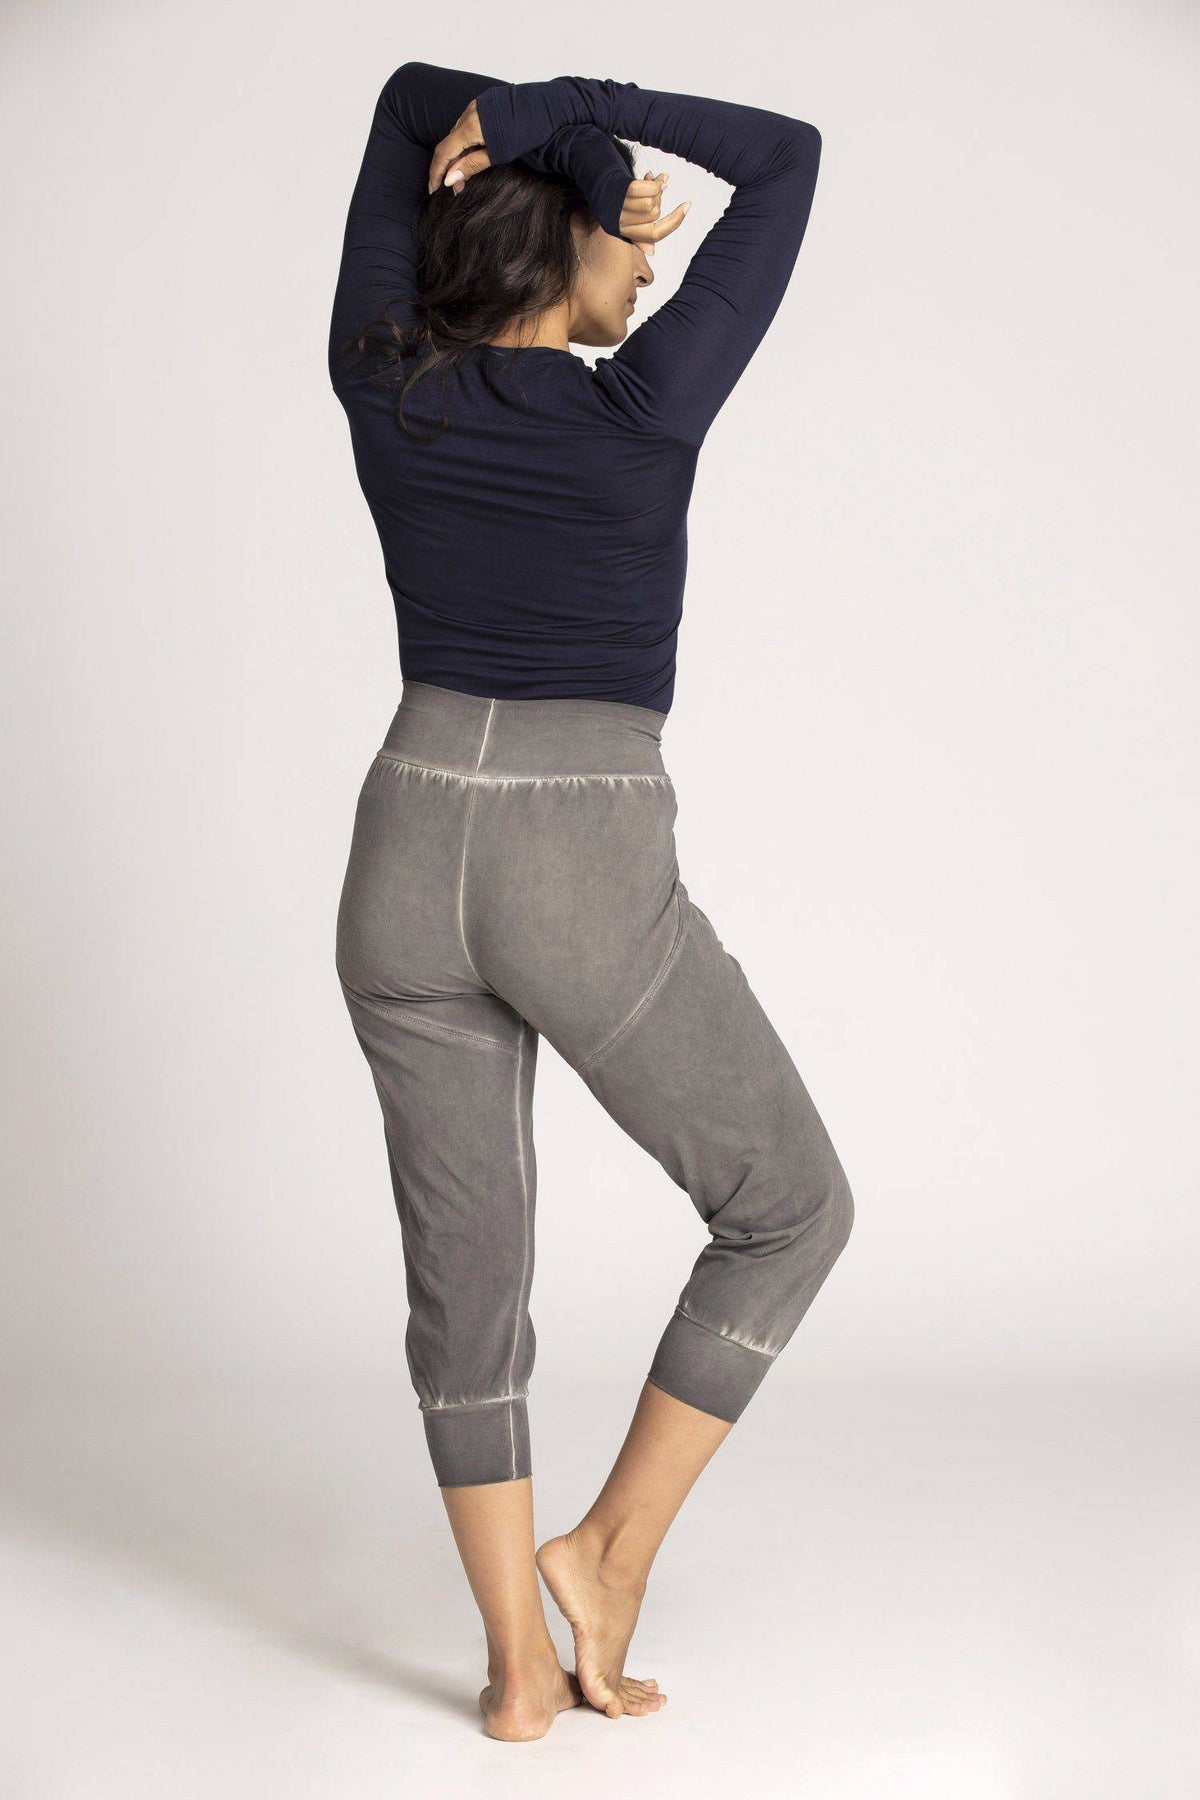 Stone Wash Slouchy Capri Pants - womens clothing - Ripple Yoga Wear